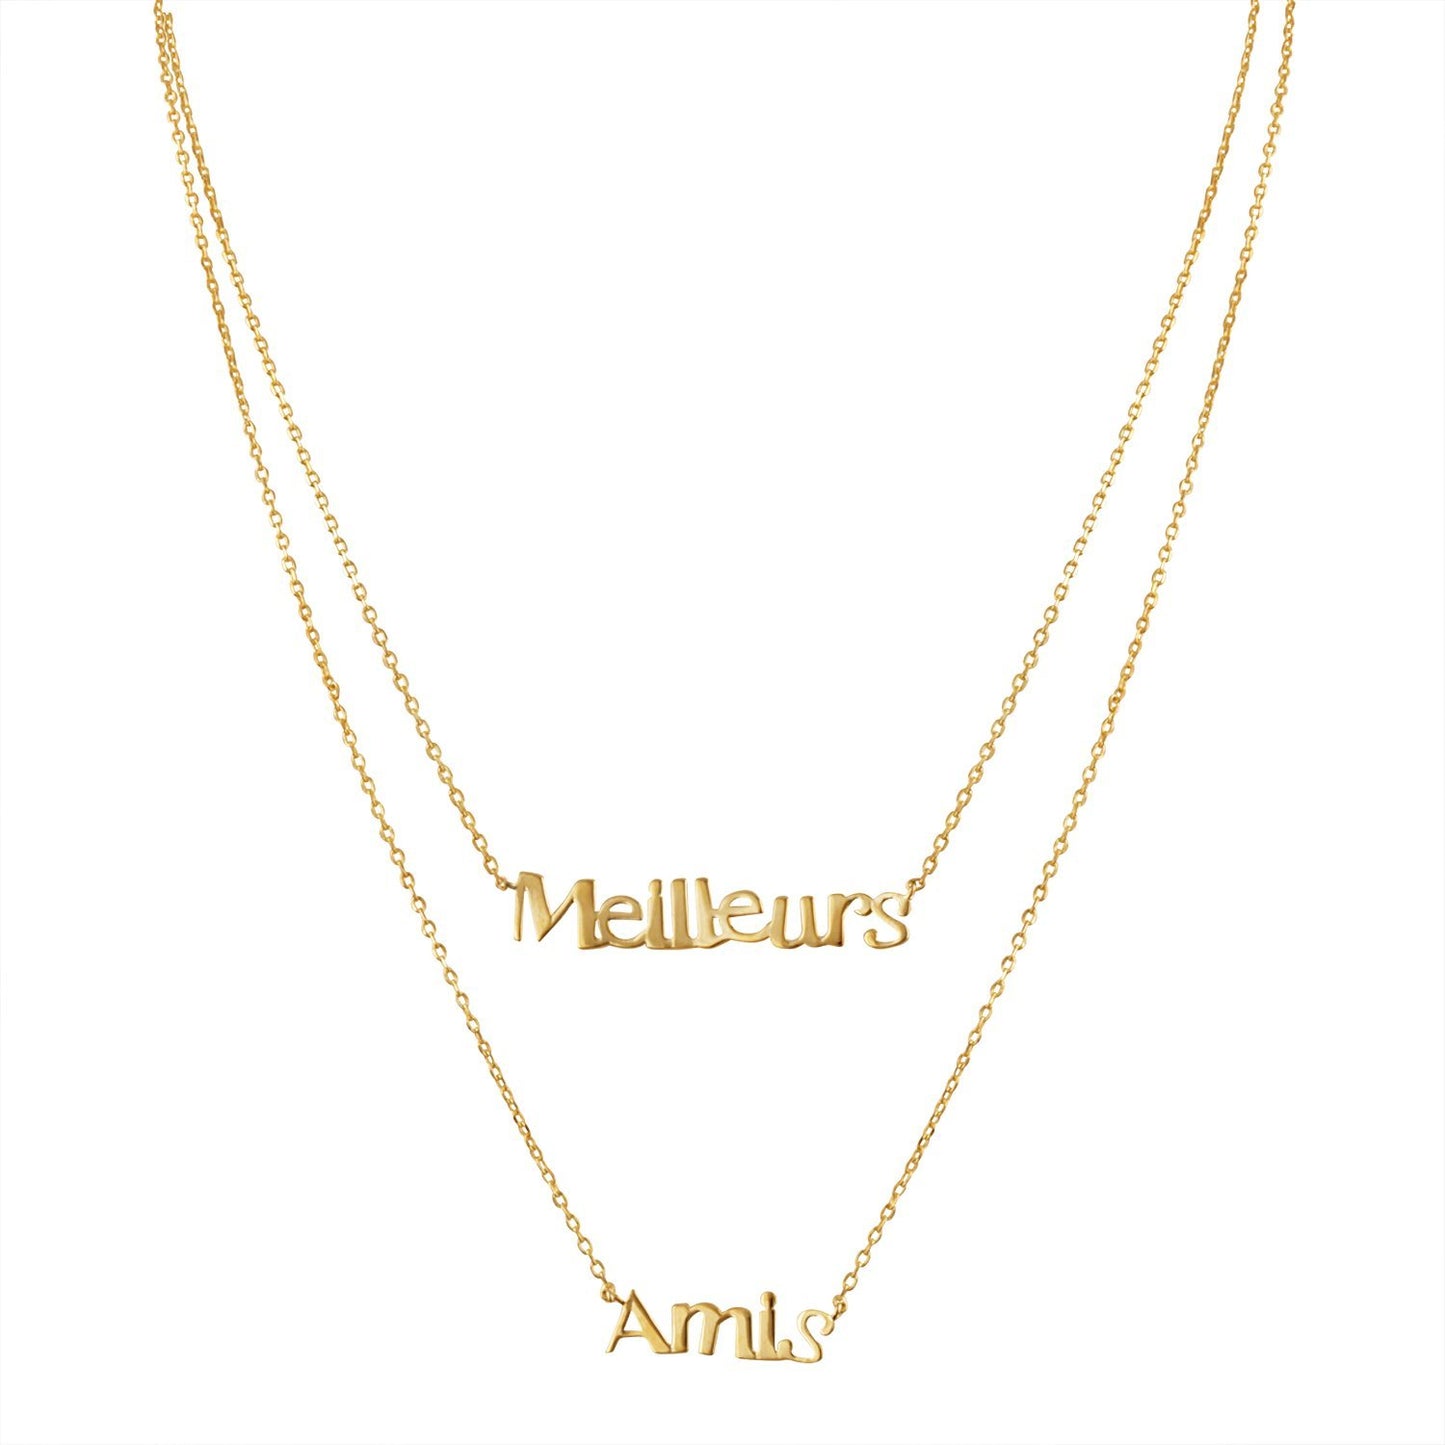 Meilleurs Amis / Best Friend Necklace in Gold - Machete Jewelry